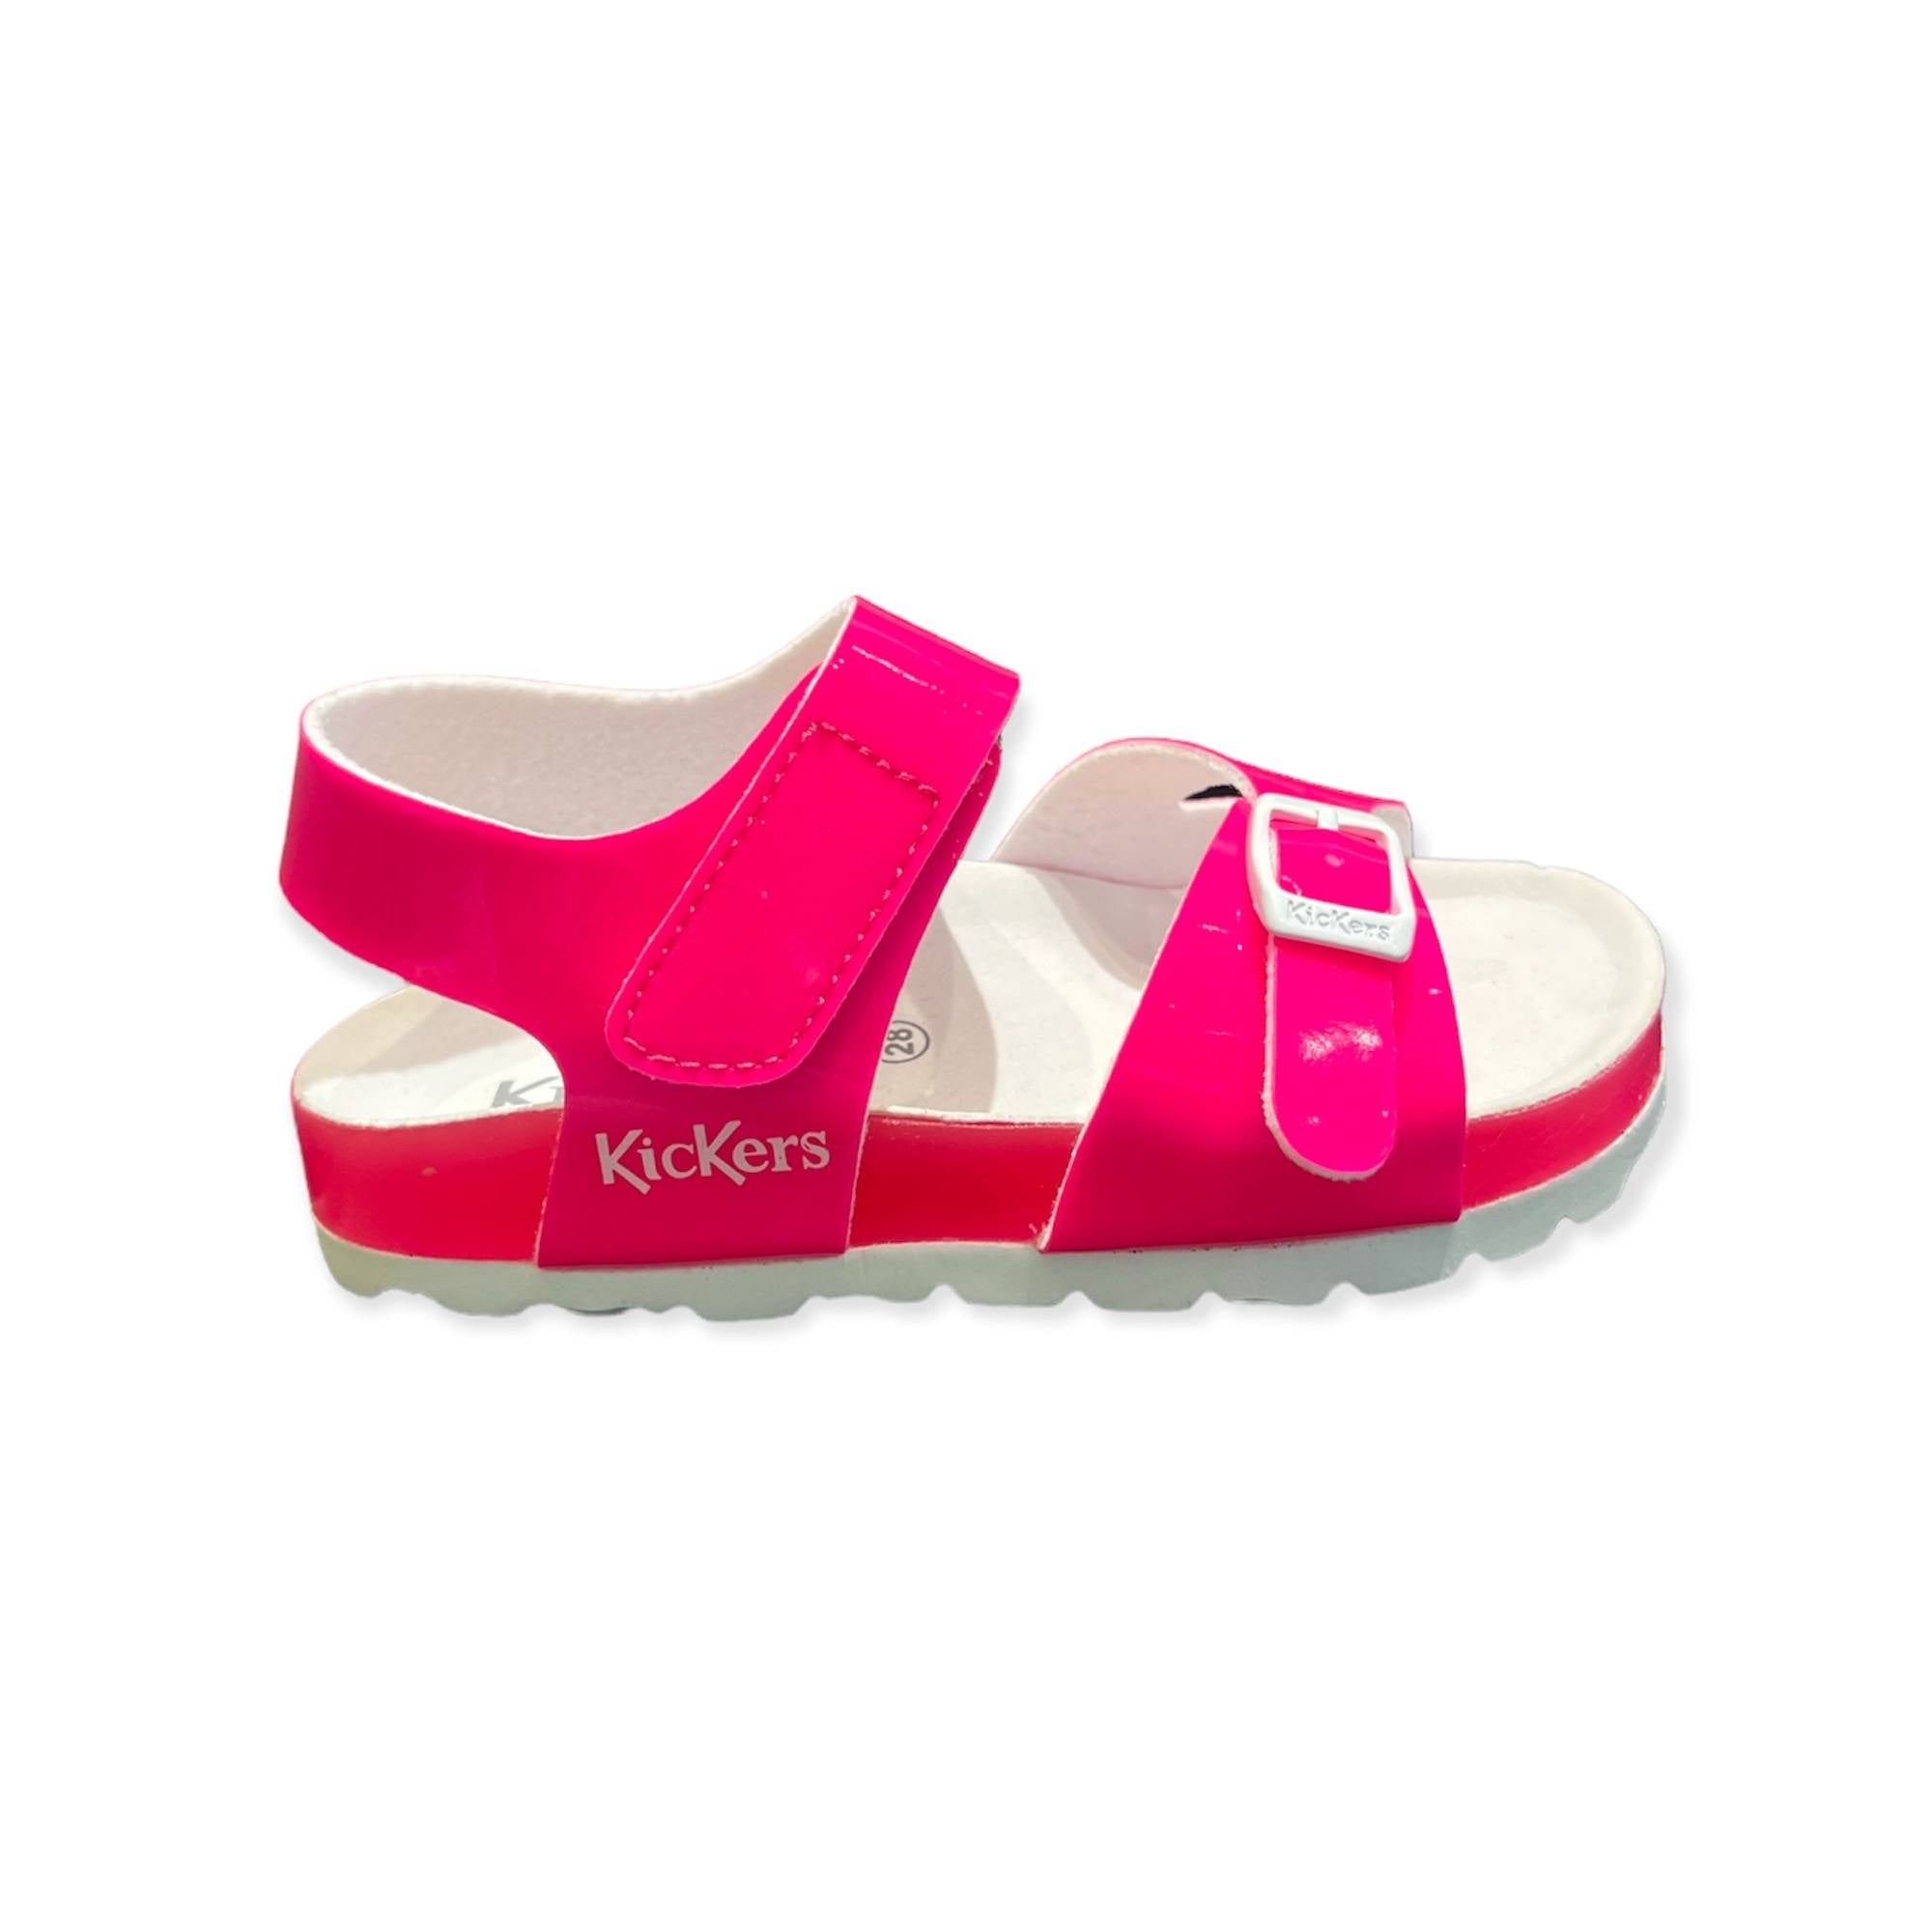 Kickers Sunkro Sandals